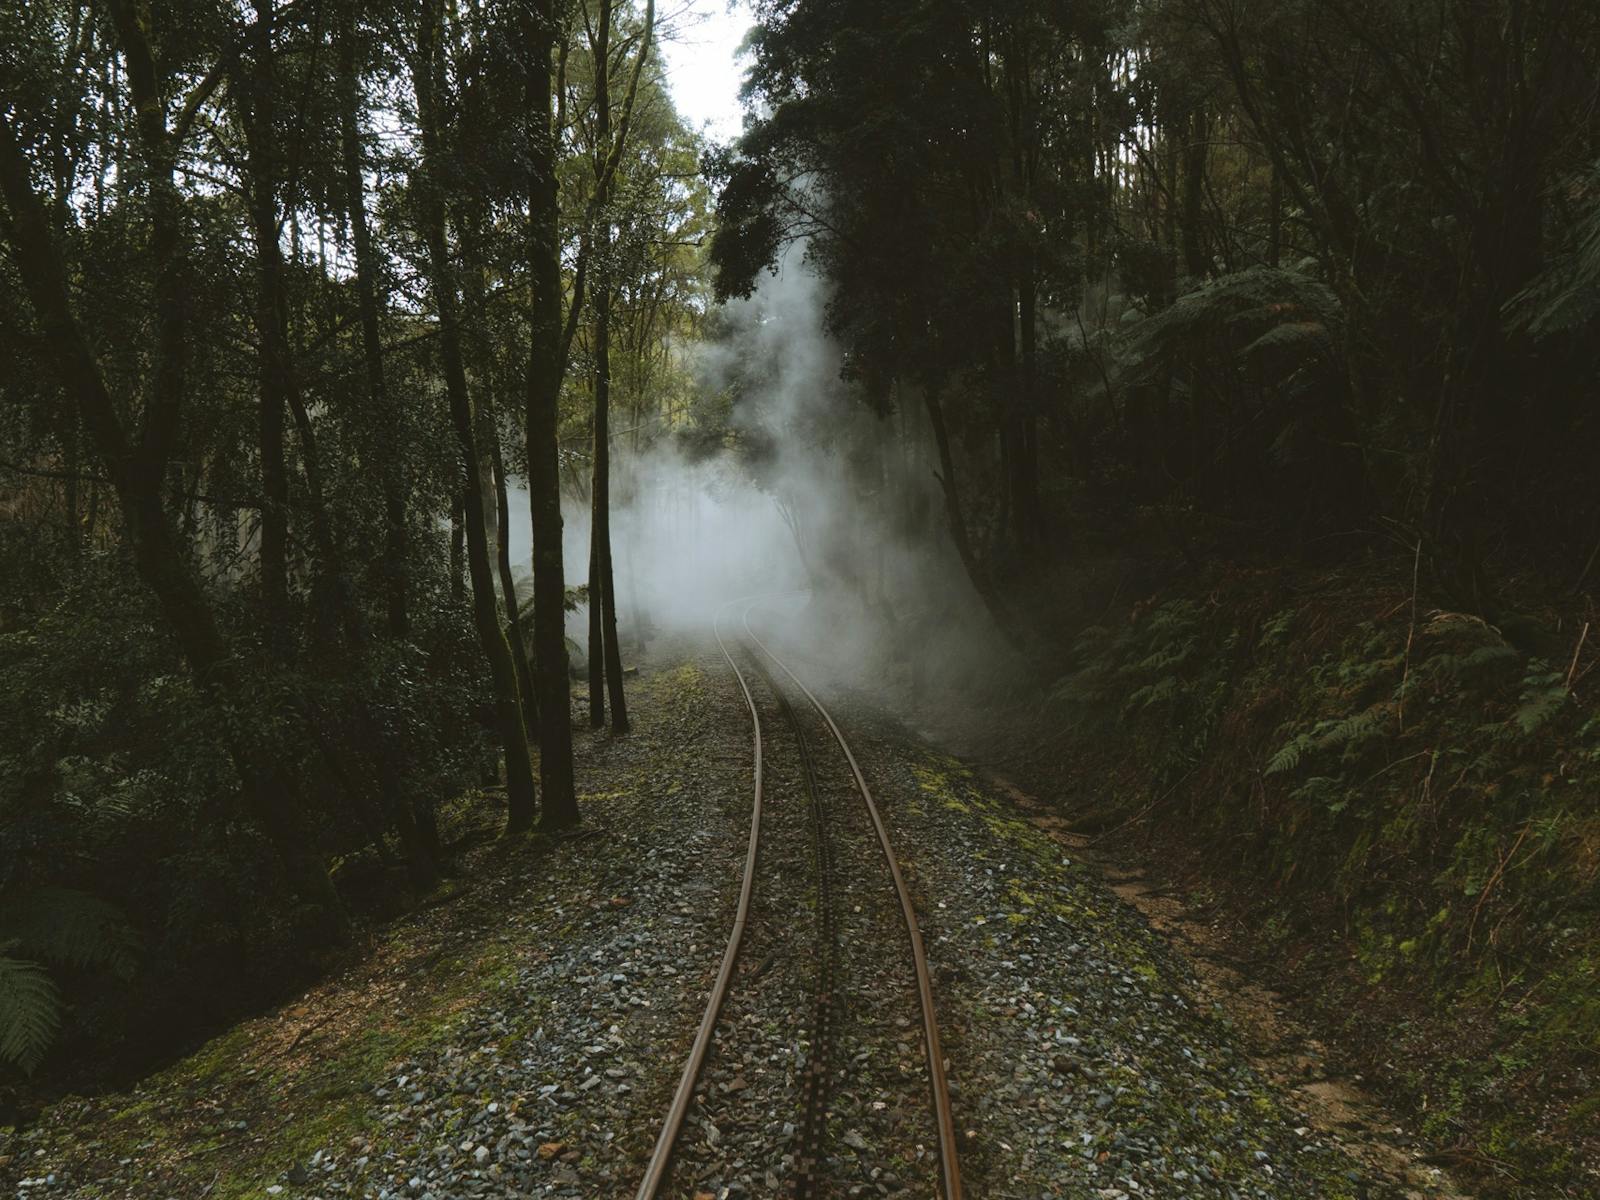 Train track through the wilderness